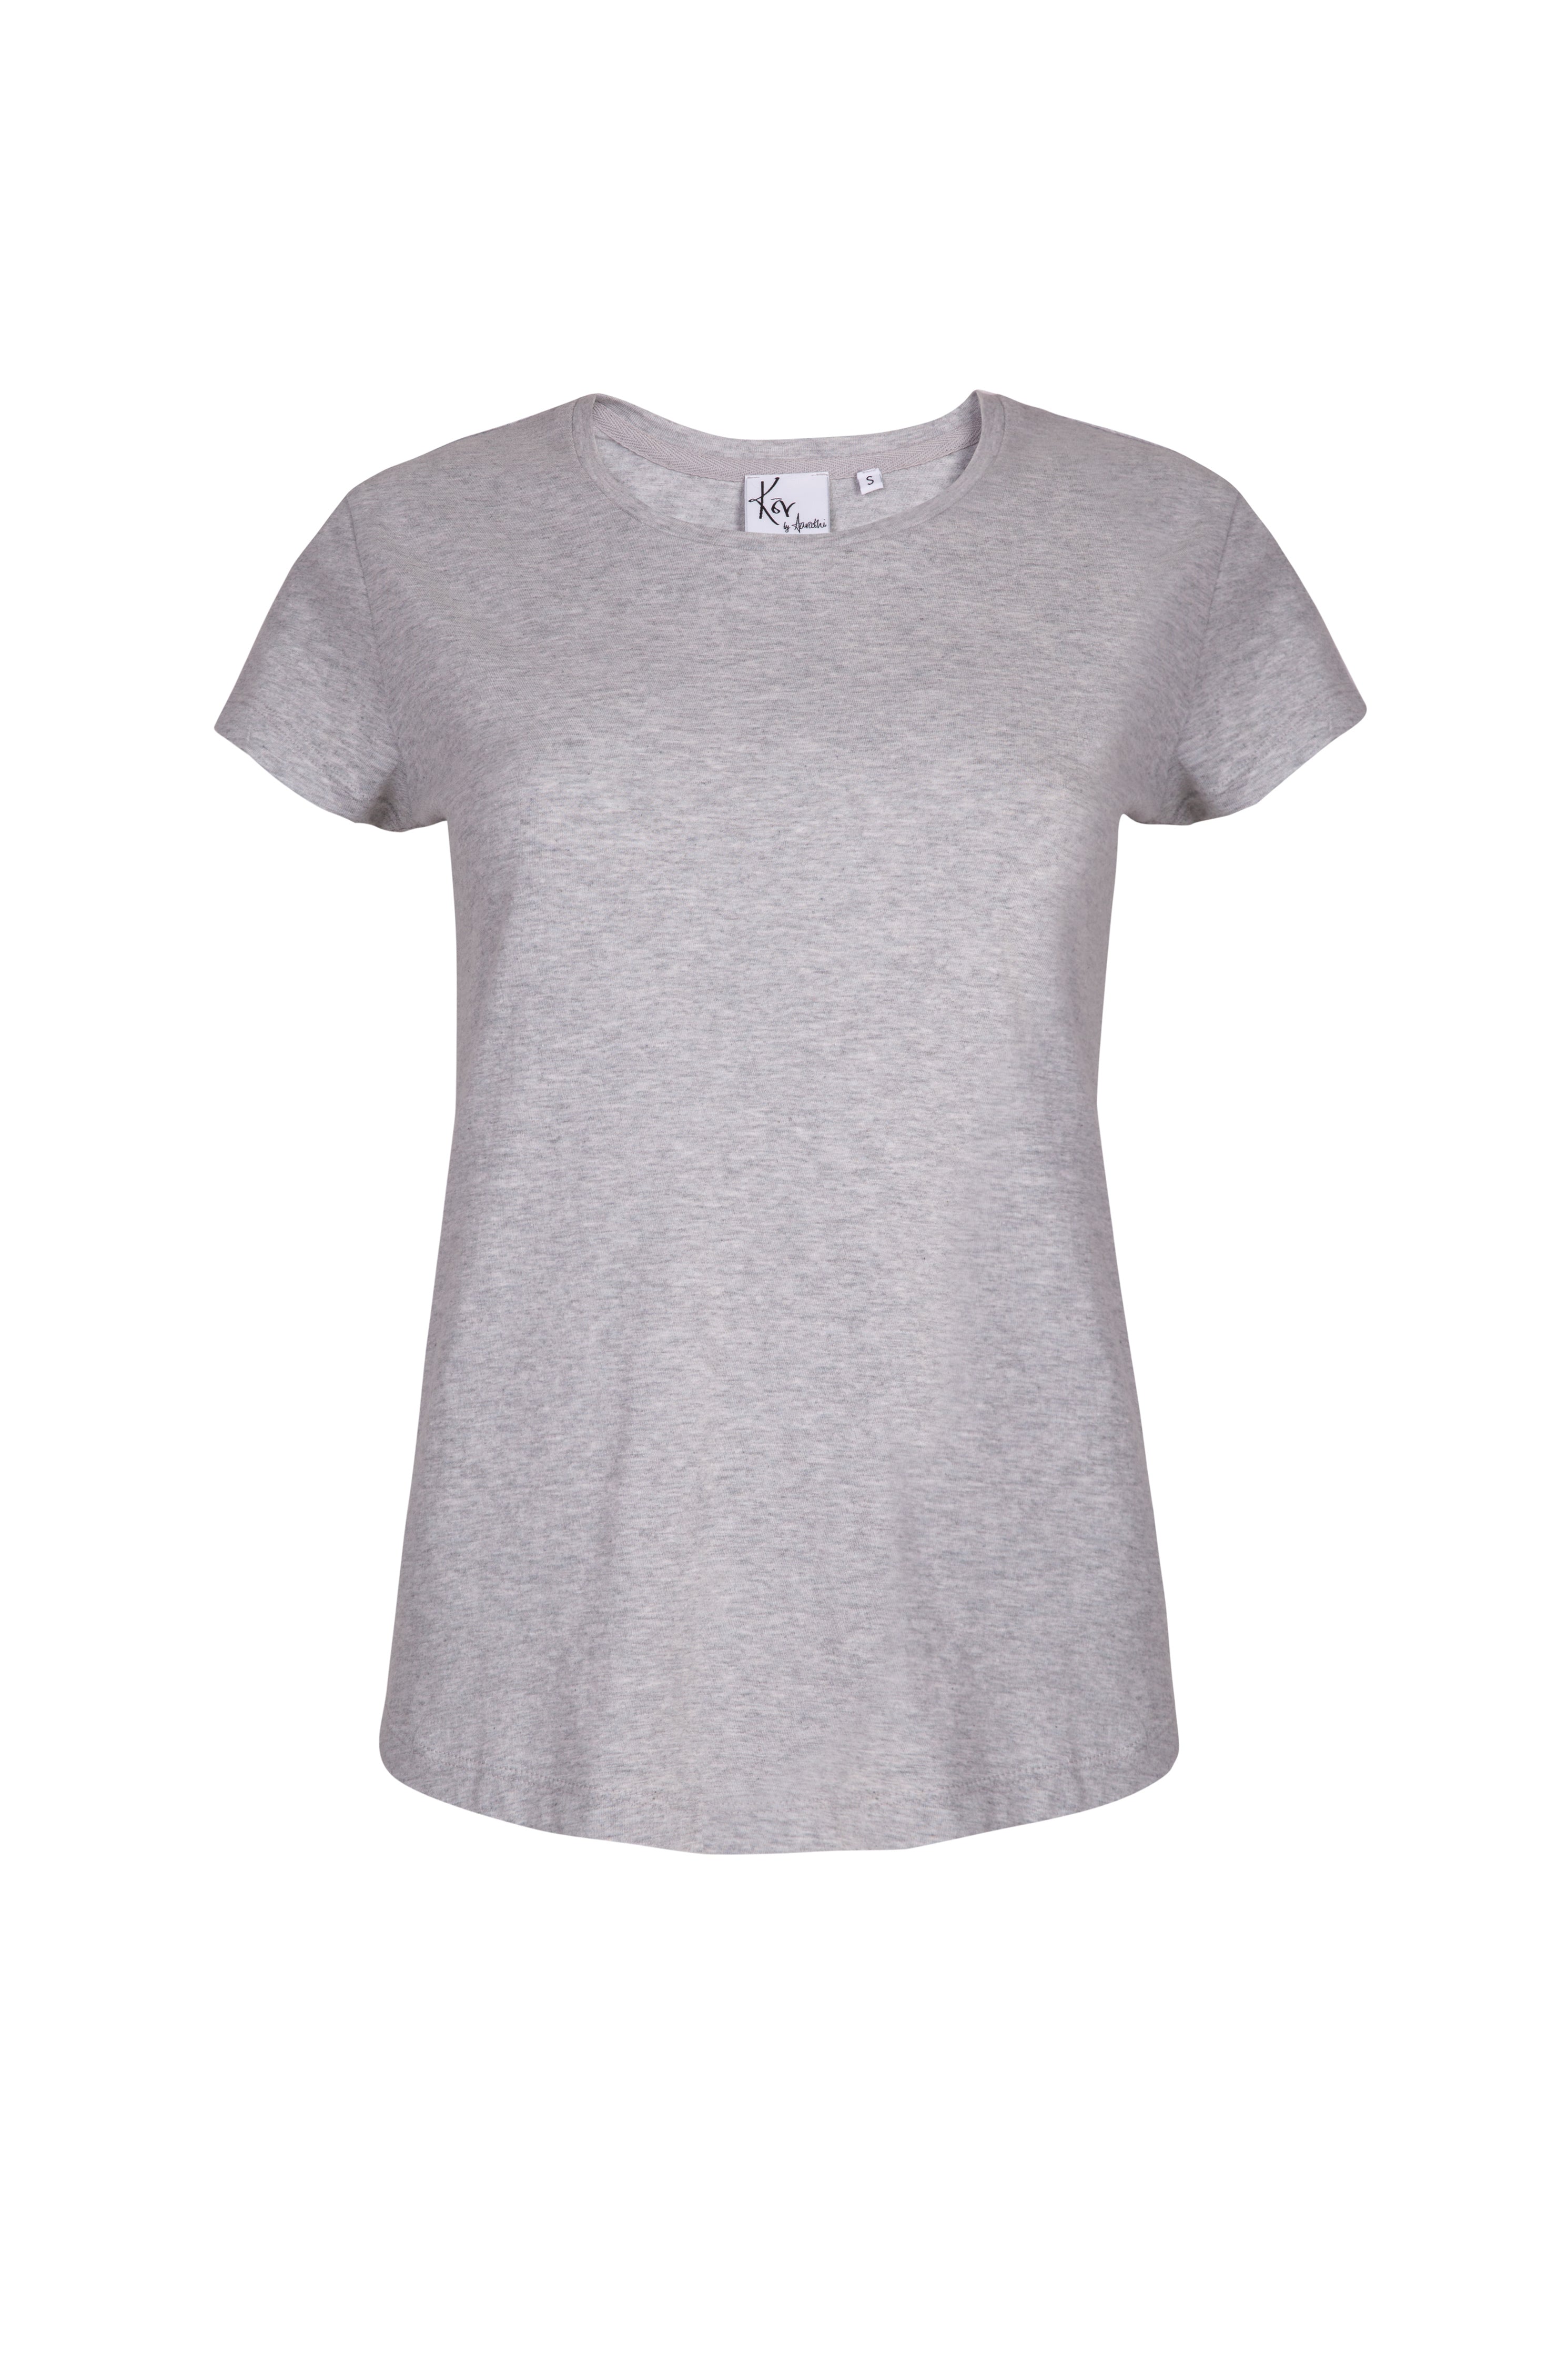 Grey organic cotton fitted women's t-shirt 